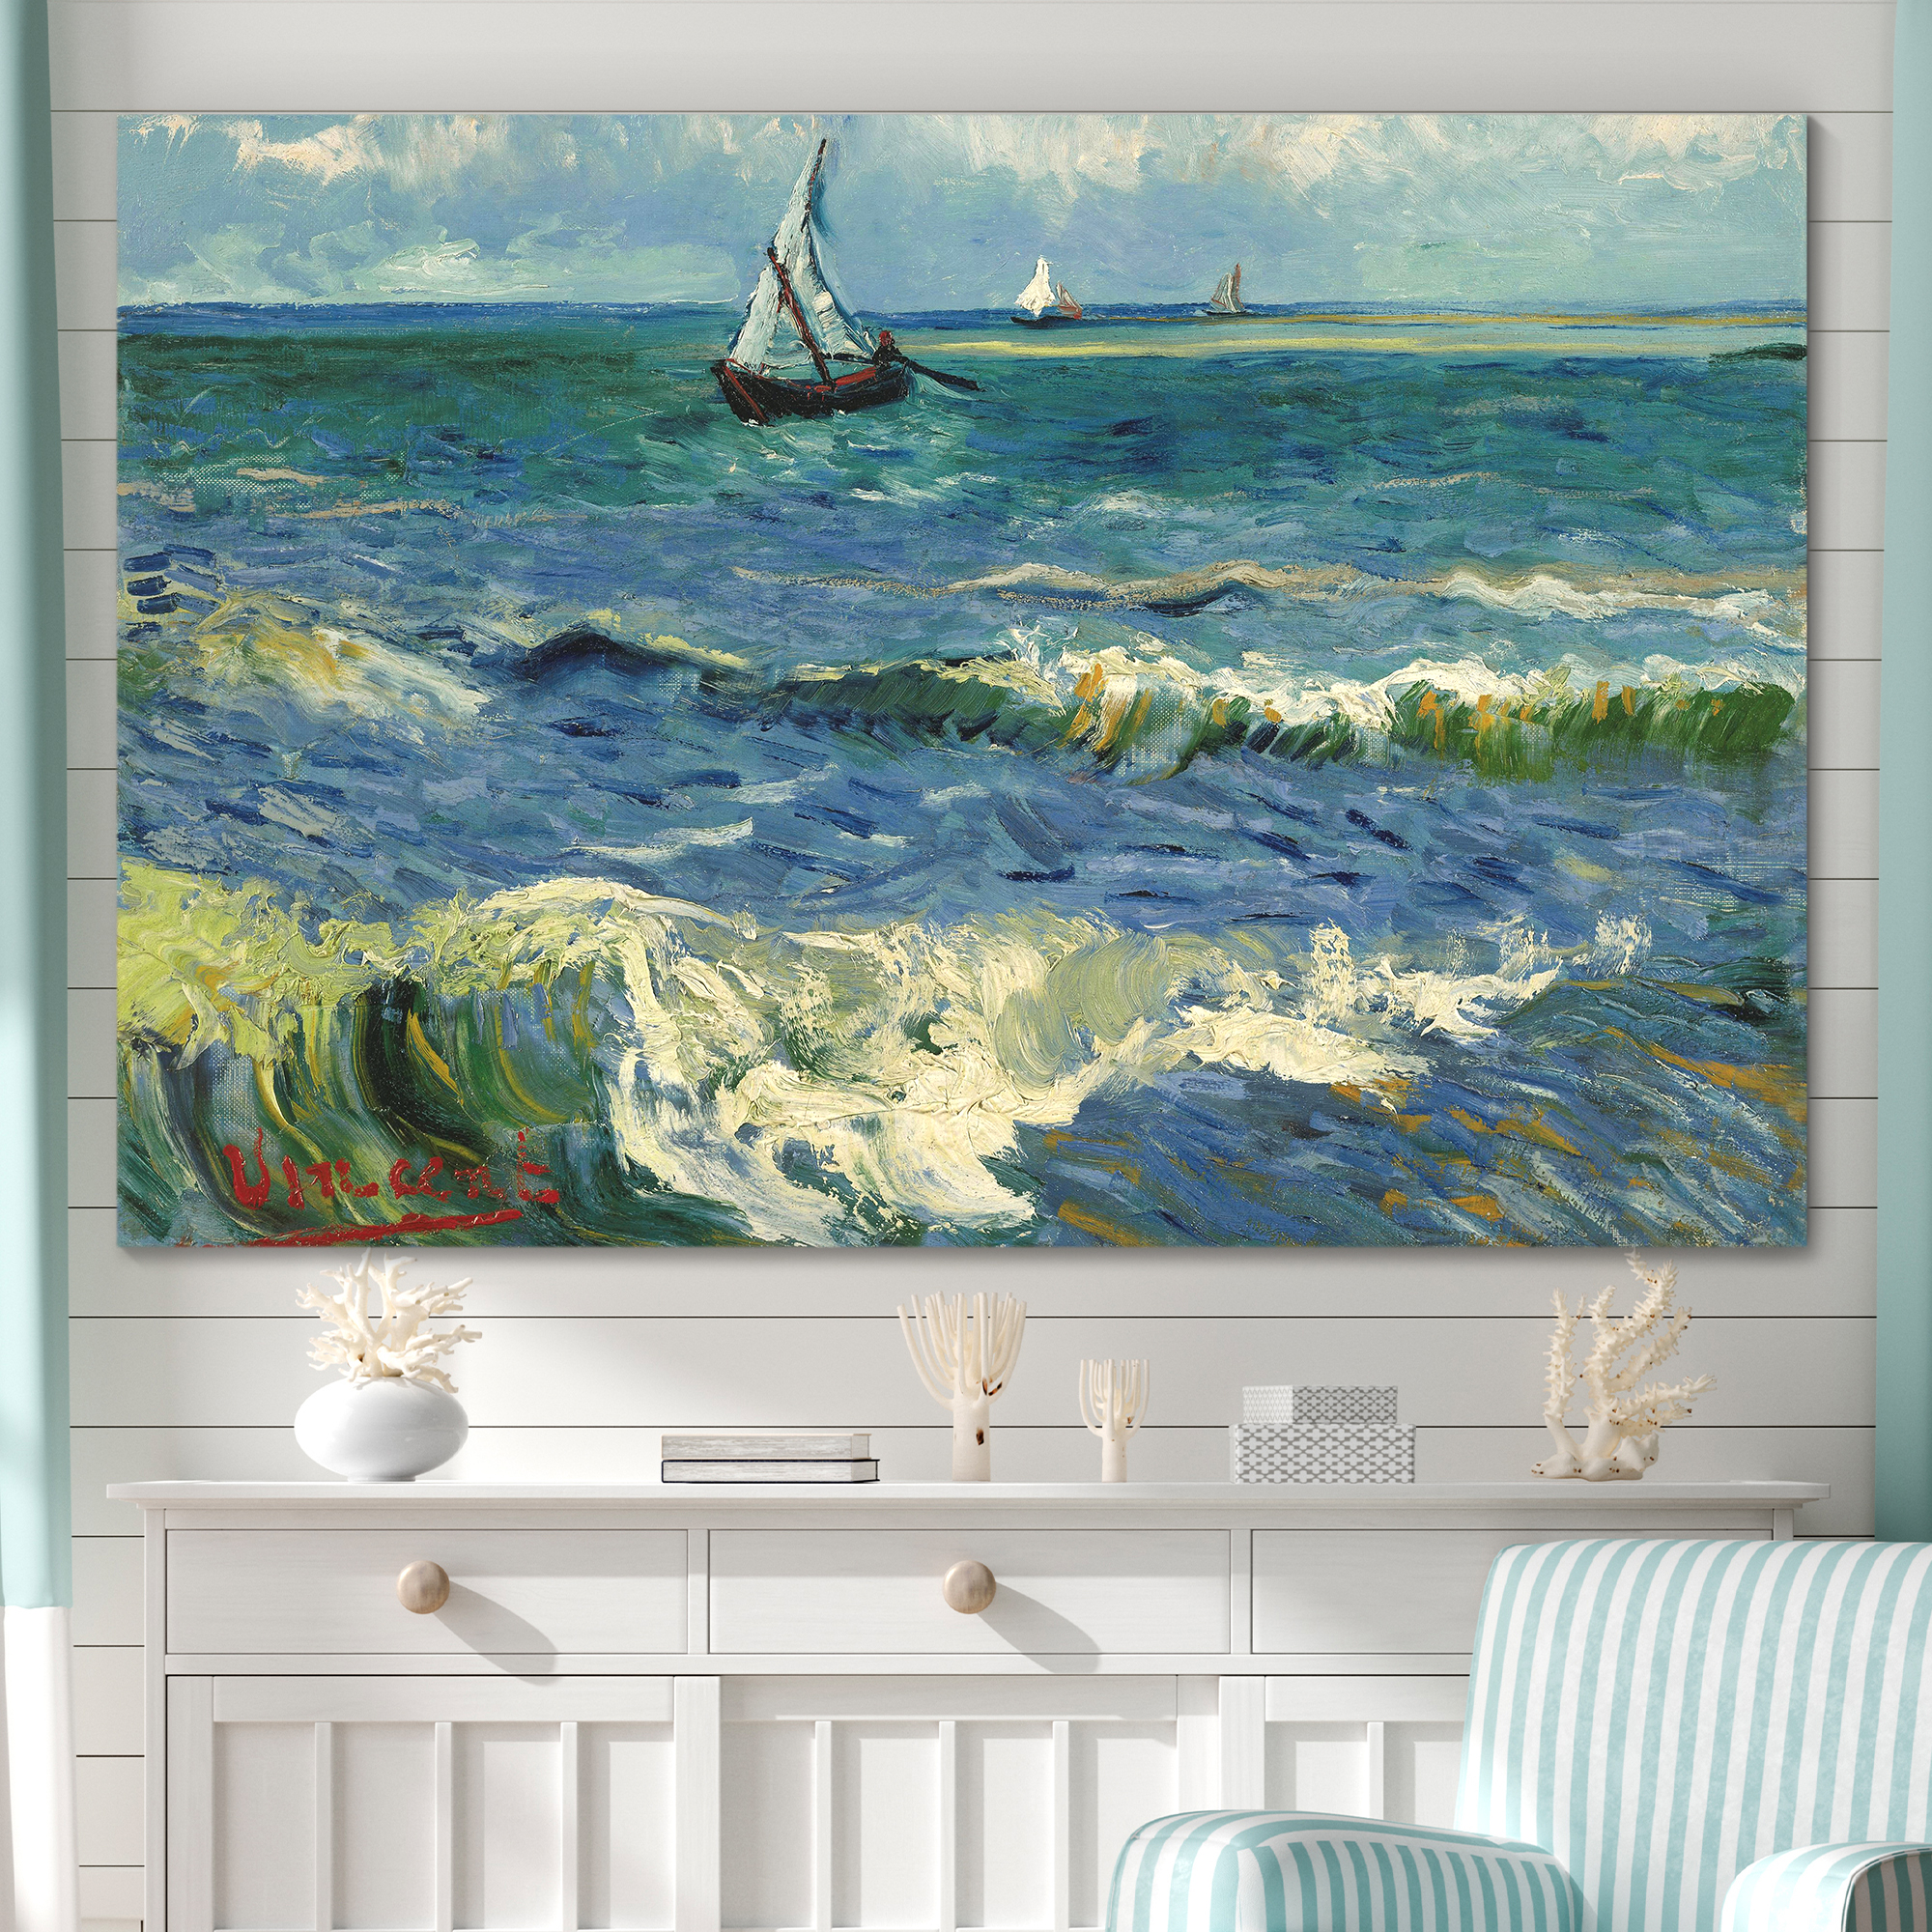 Seascape Near Les Saintes Maries De La Mer by Vincent Van Gogh - Oil Painting Reproduction on Canvas Prints Wall Art, Ready to Hang - 12x18 inches